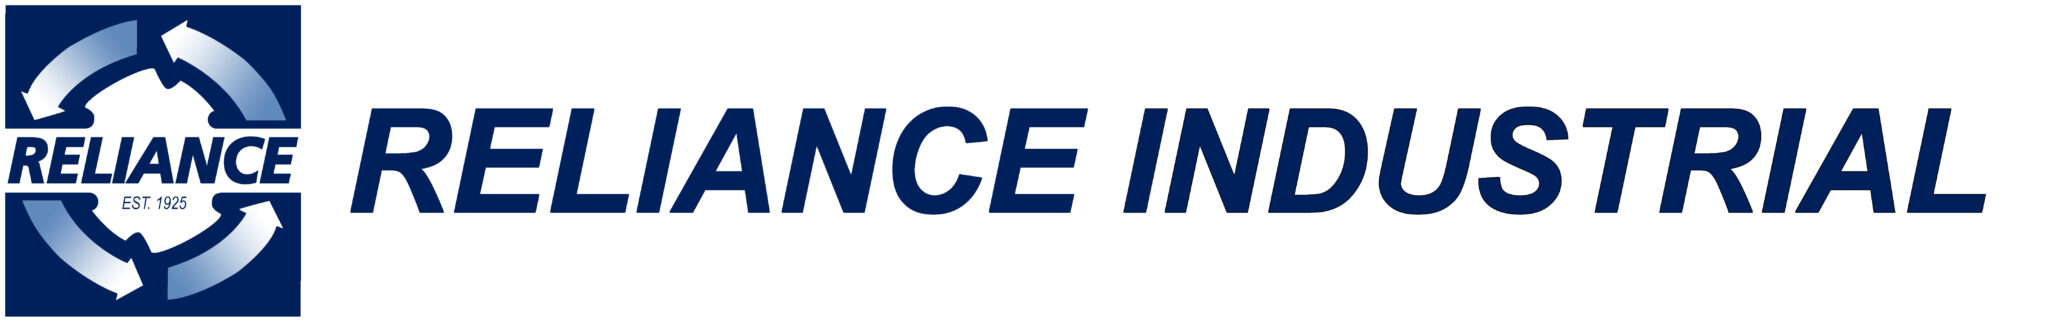 Reliance Industrial Ltd